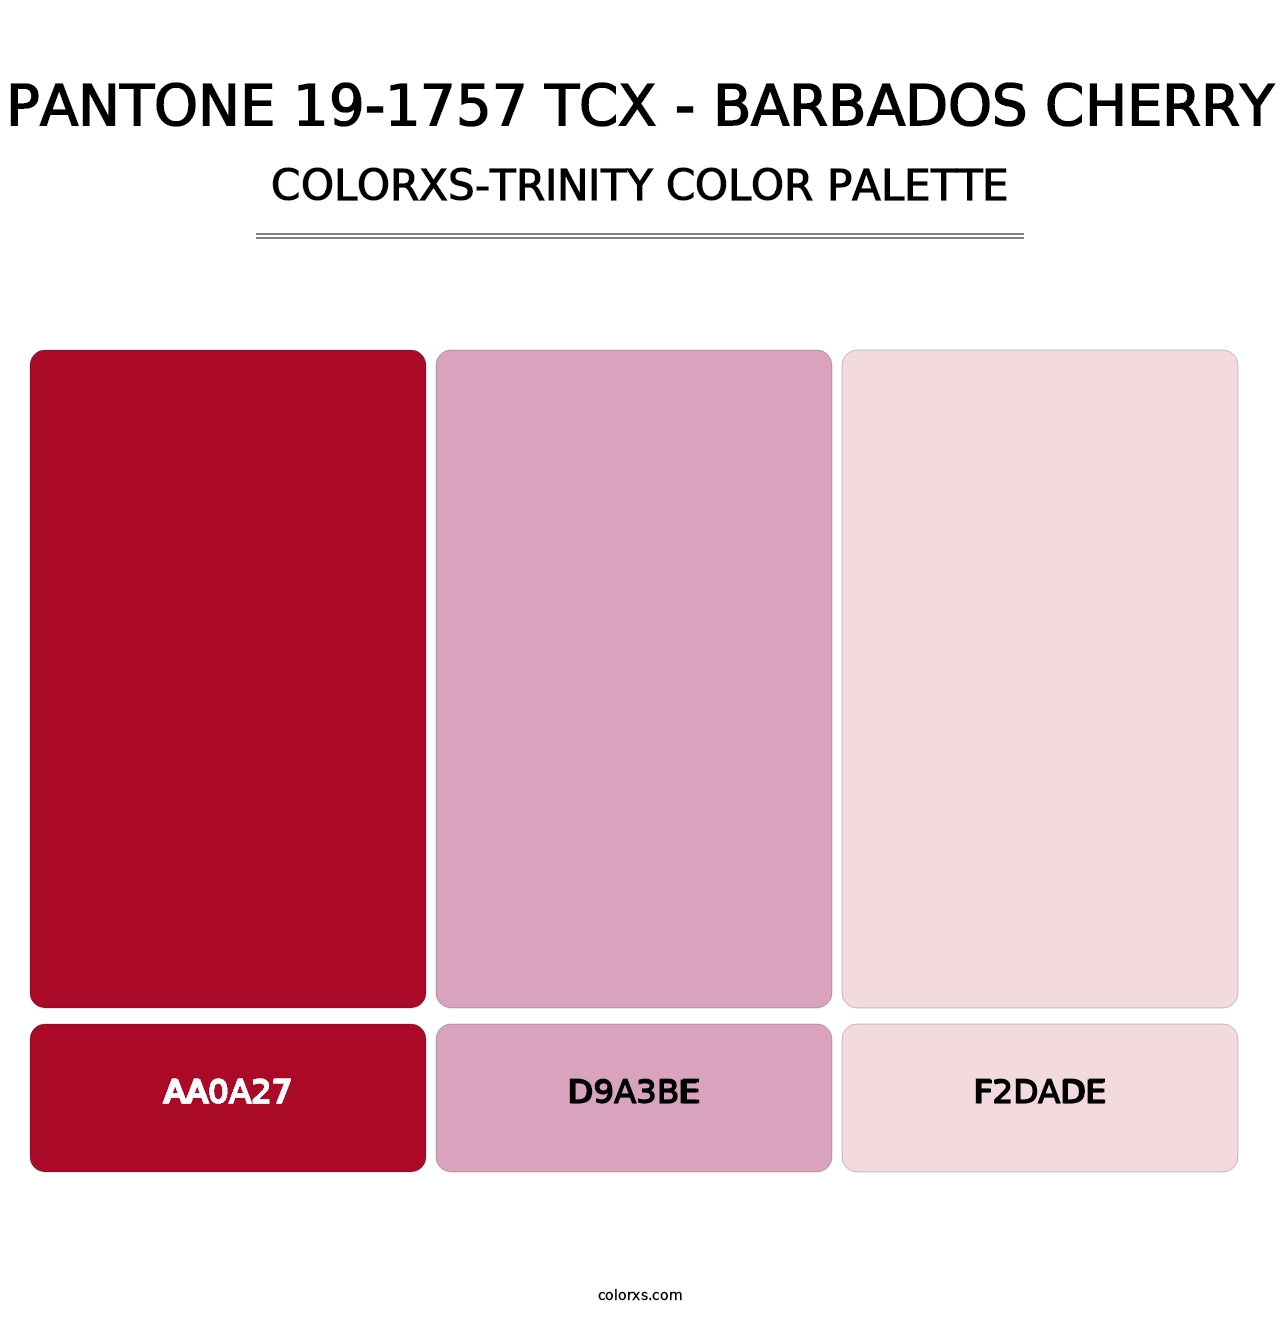 PANTONE 19-1757 TCX - Barbados Cherry - Colorxs Trinity Palette